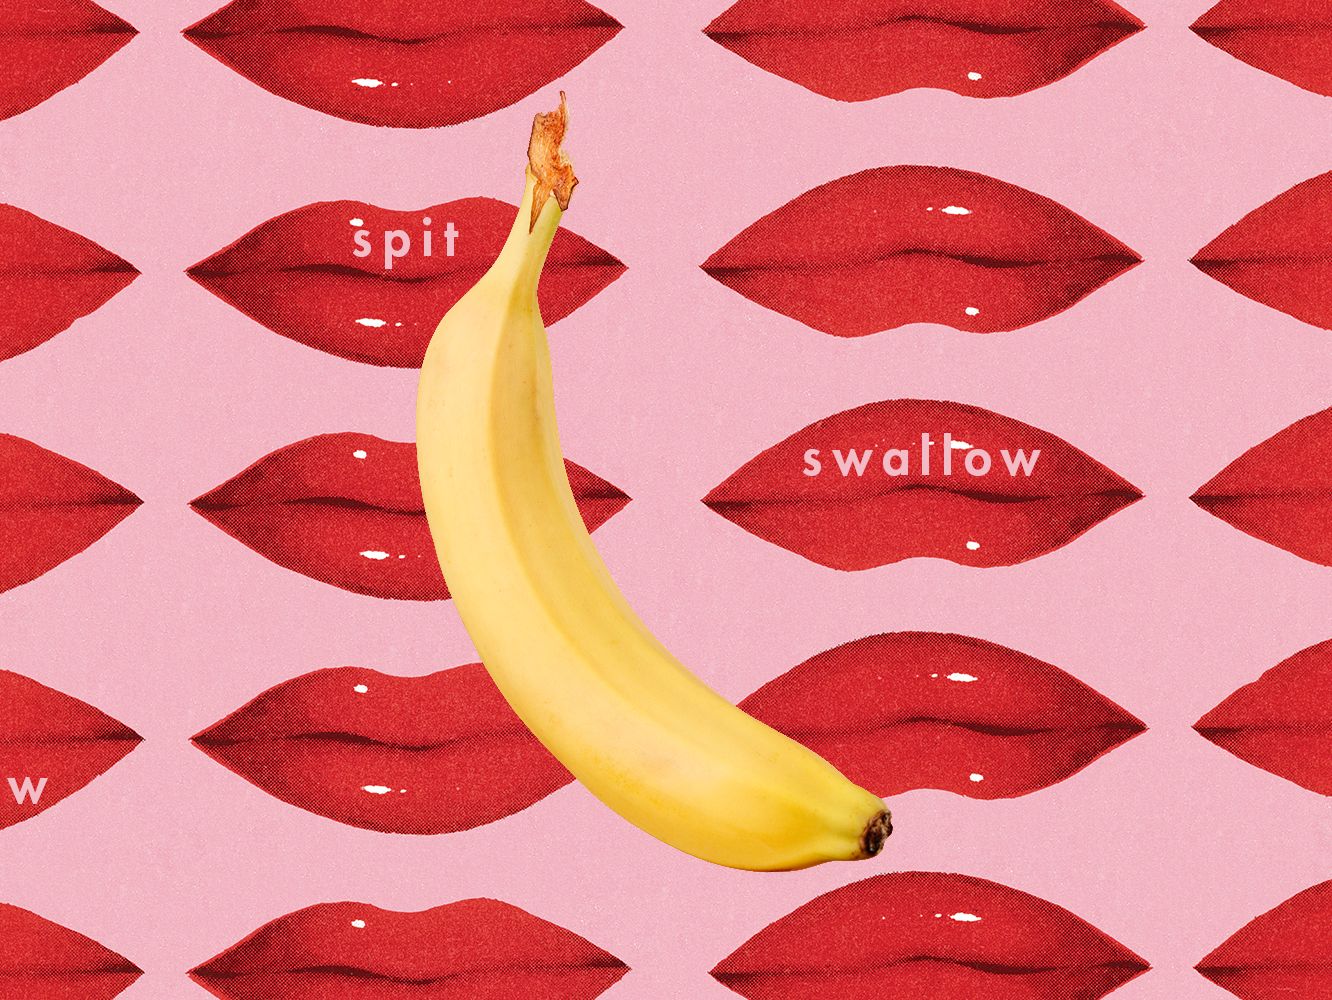 devin littlefield recommends Women Who Like To Swallow